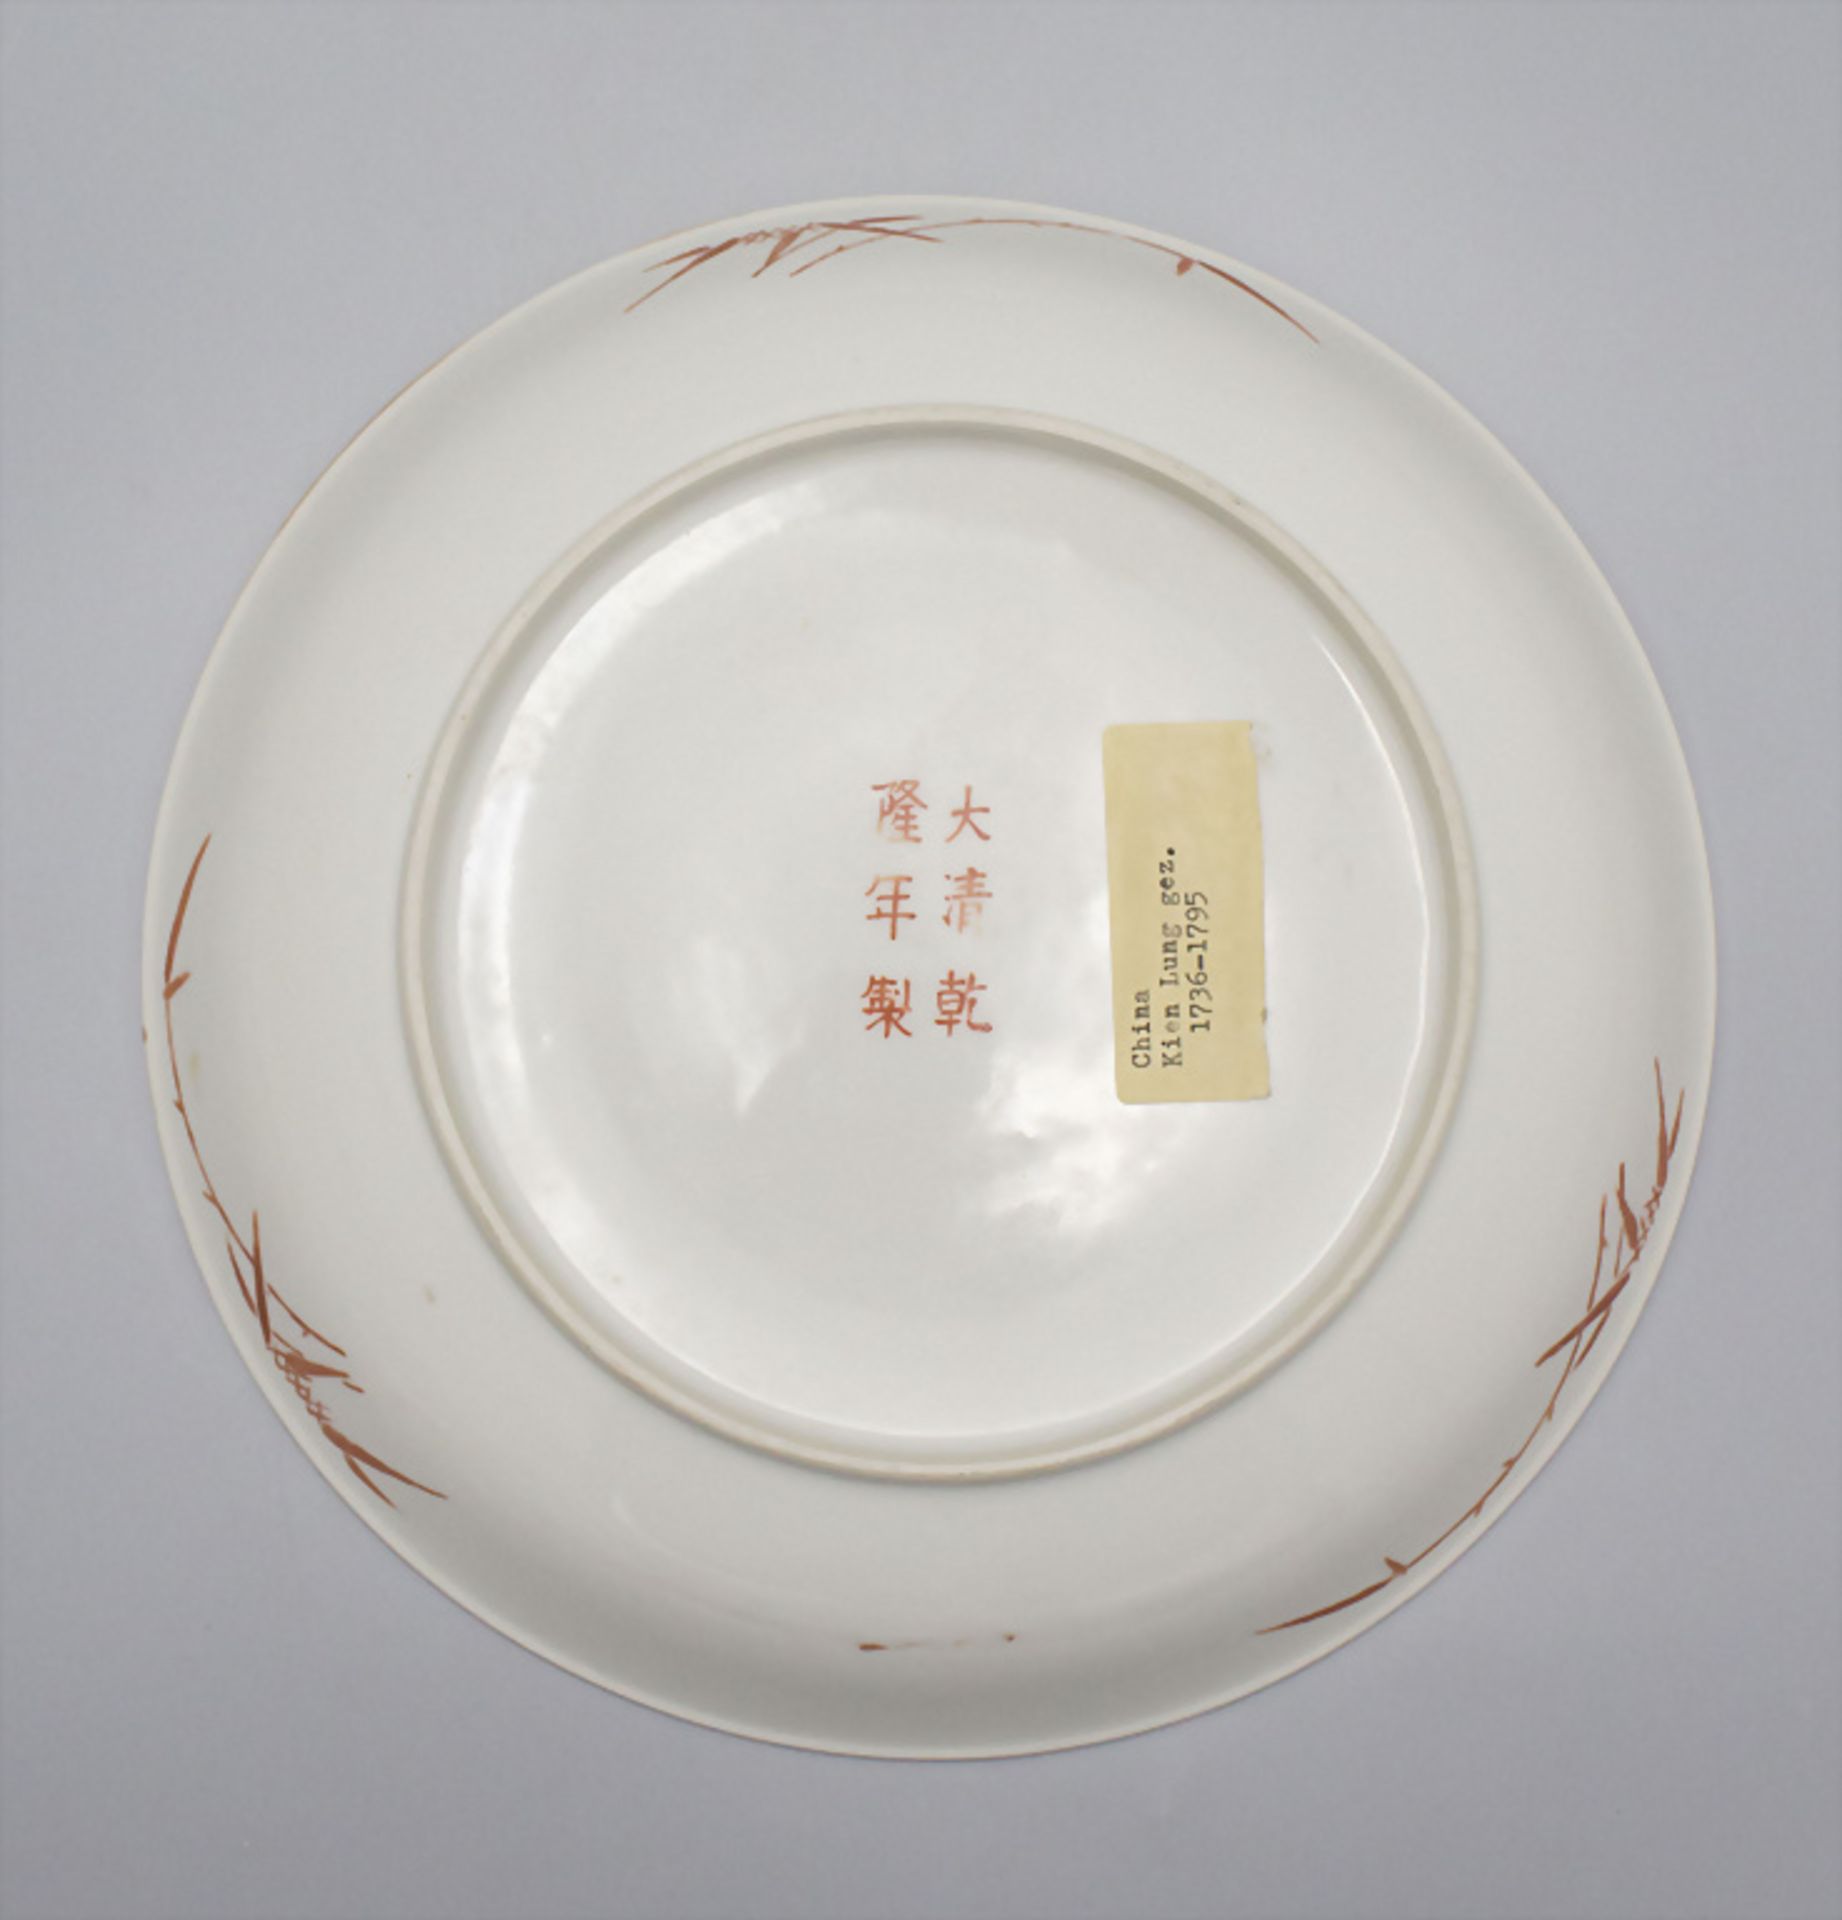 Teller mit Drachen und Phönix Dekor / A plate with dragon and phoenix, Kien Lung, China, 18. Jh. - Image 2 of 3